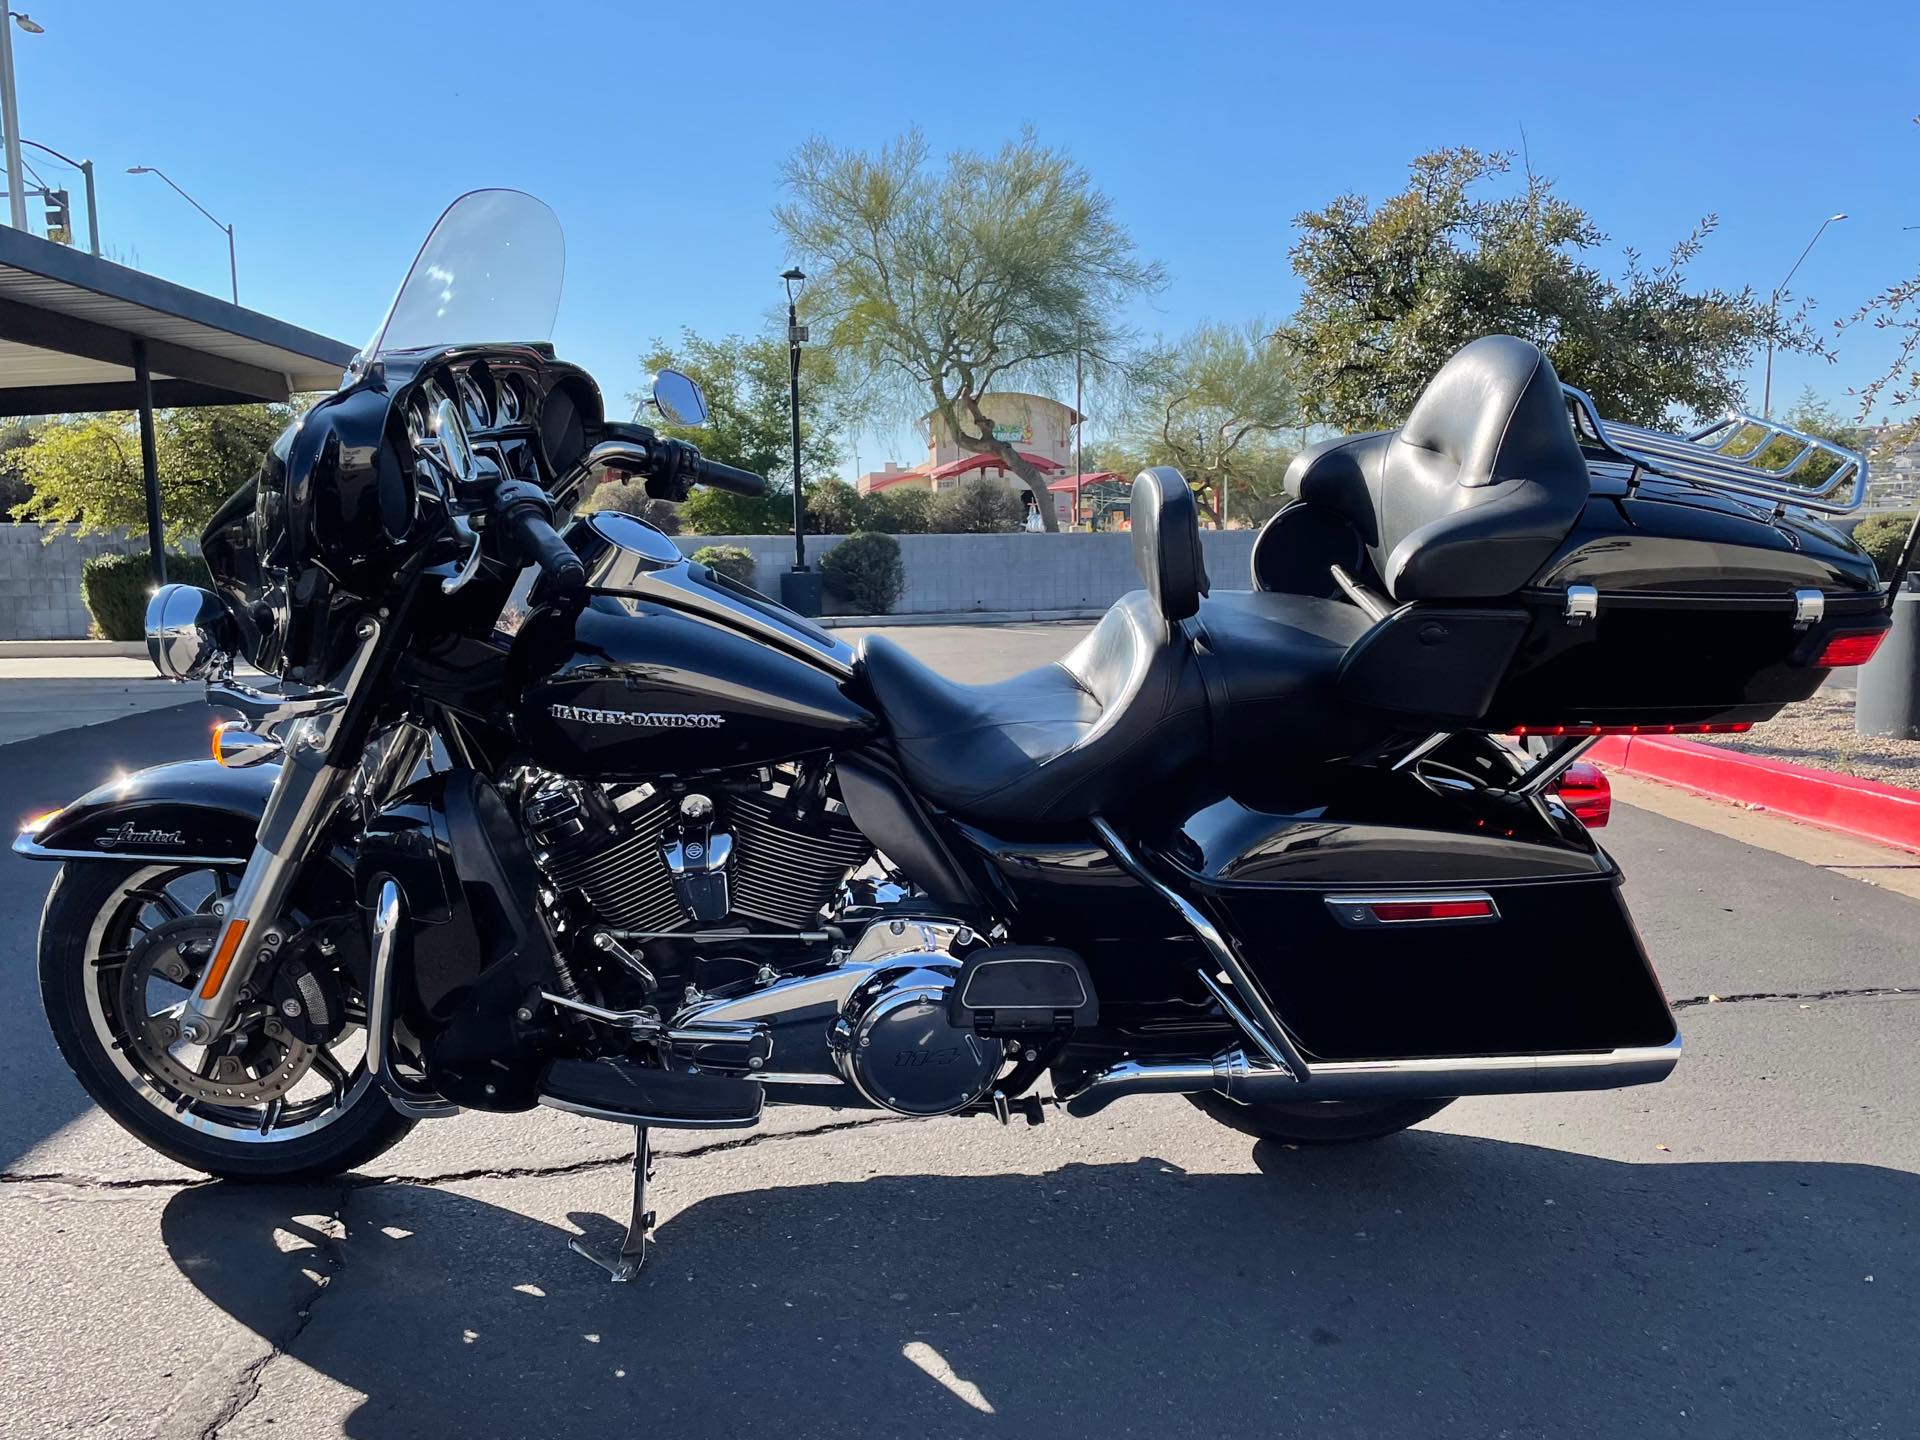 2019 Harley-Davidson Electra Glide Ultra Limited at Buddy Stubbs Arizona Harley-Davidson